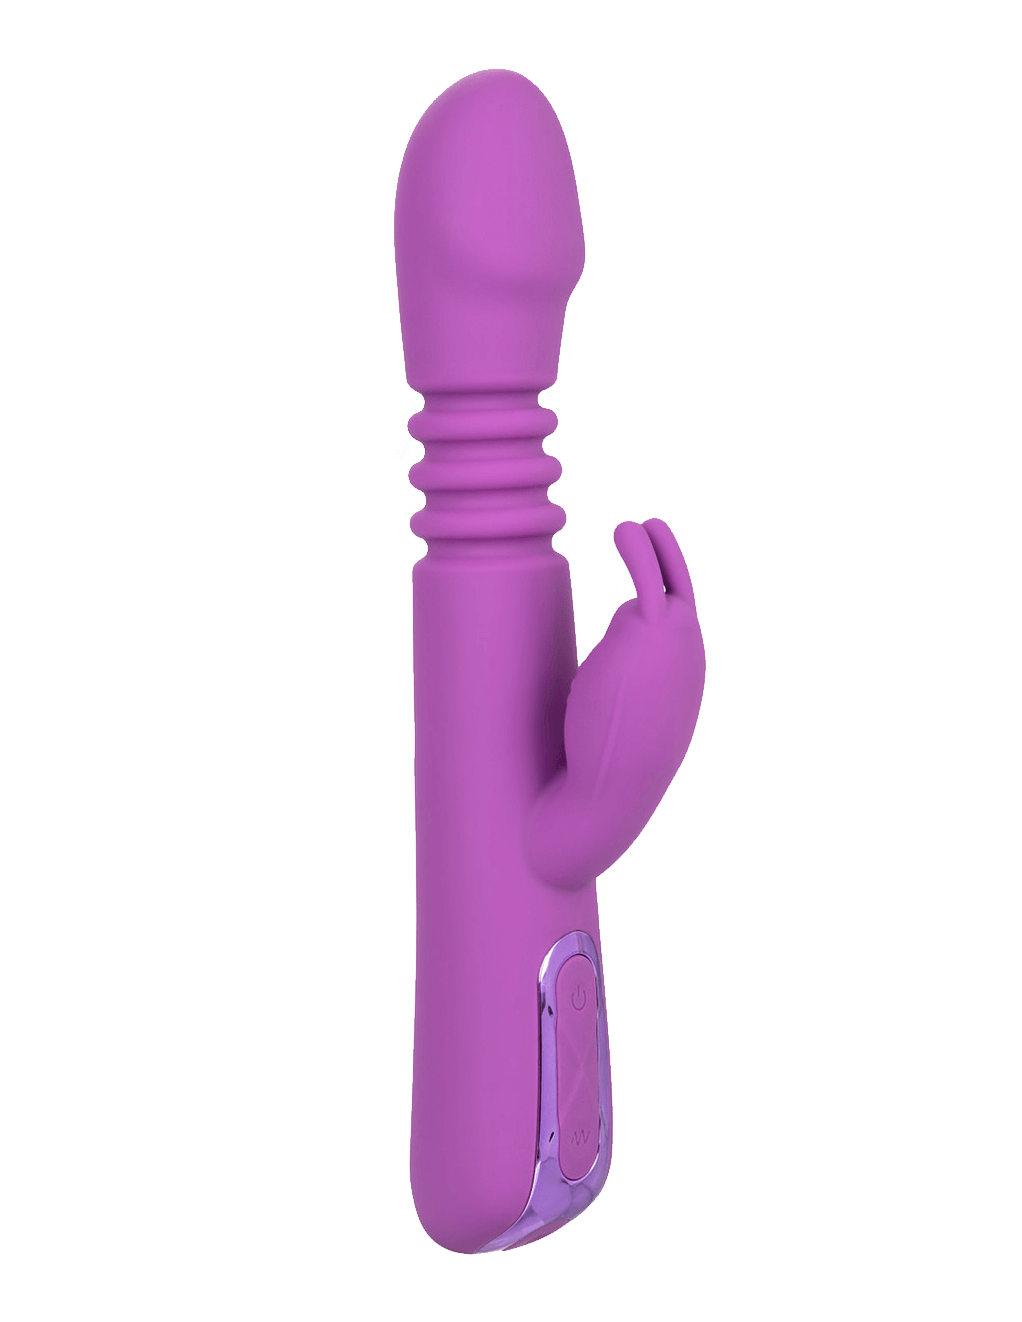 Jack Rabbit Elite Thrusting Rabbit Vibrator - Purple - Main